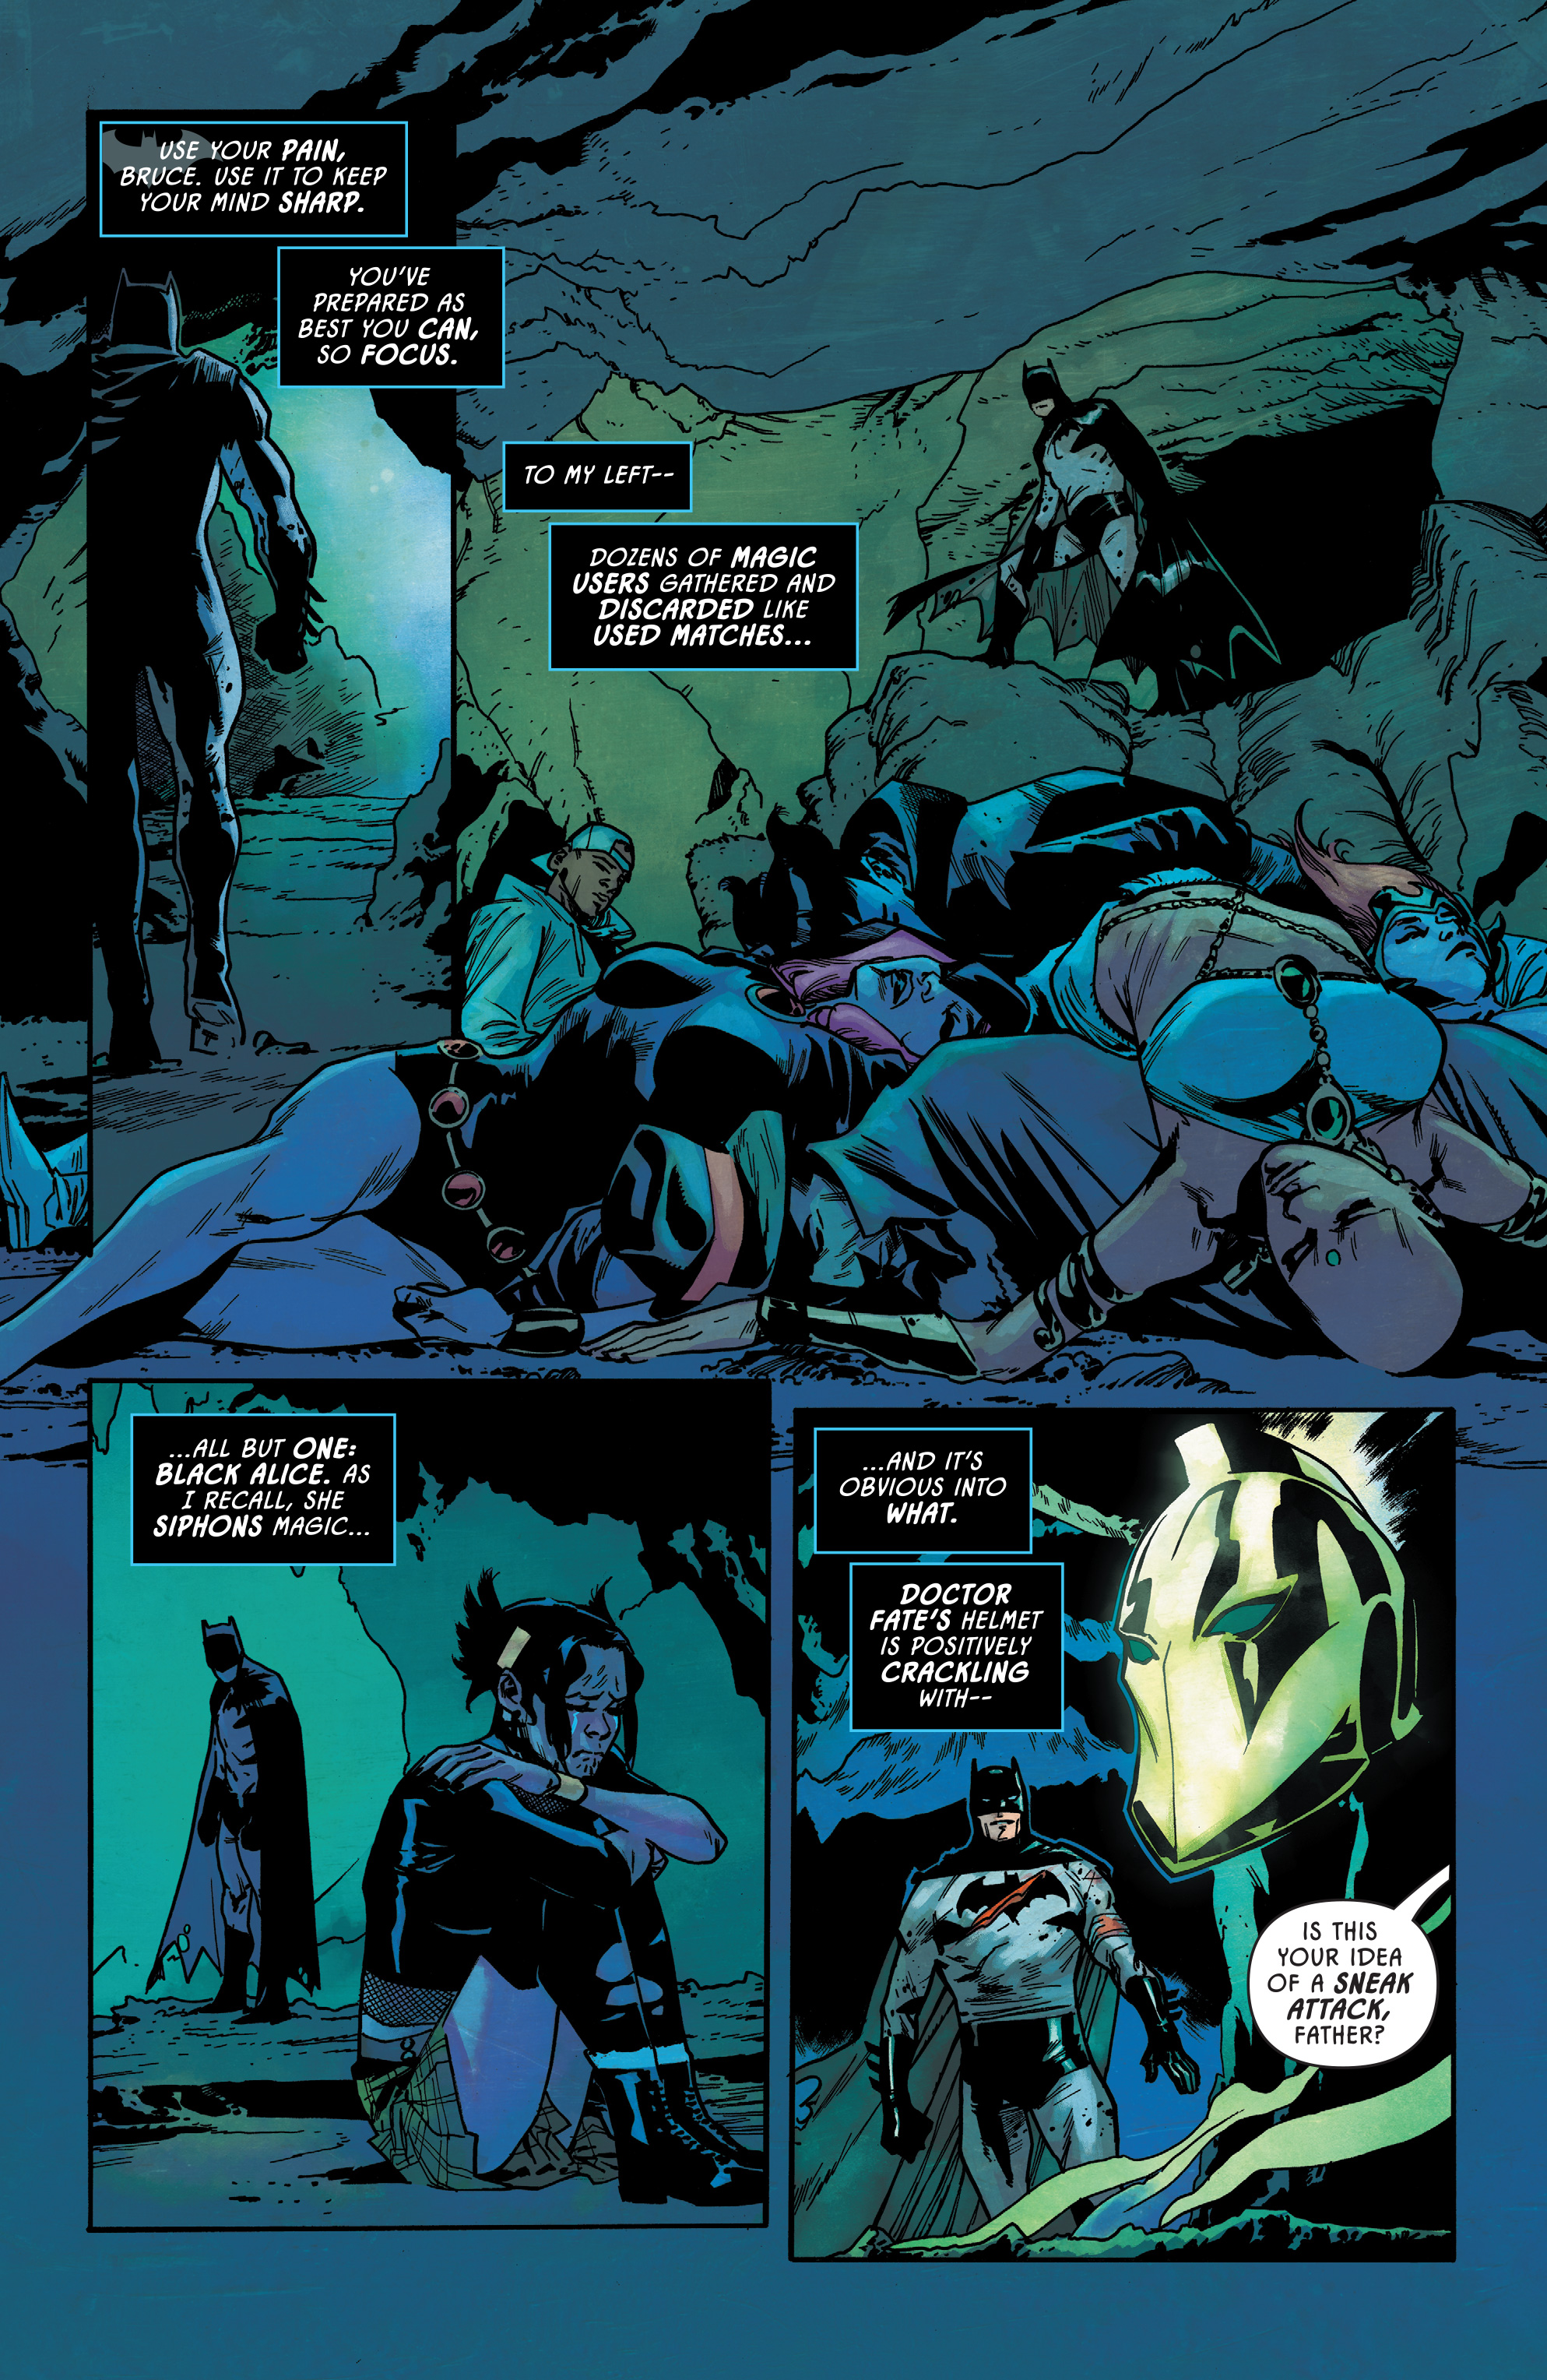 Weird Science DC Comics: Batman vs. Robin #4 Review